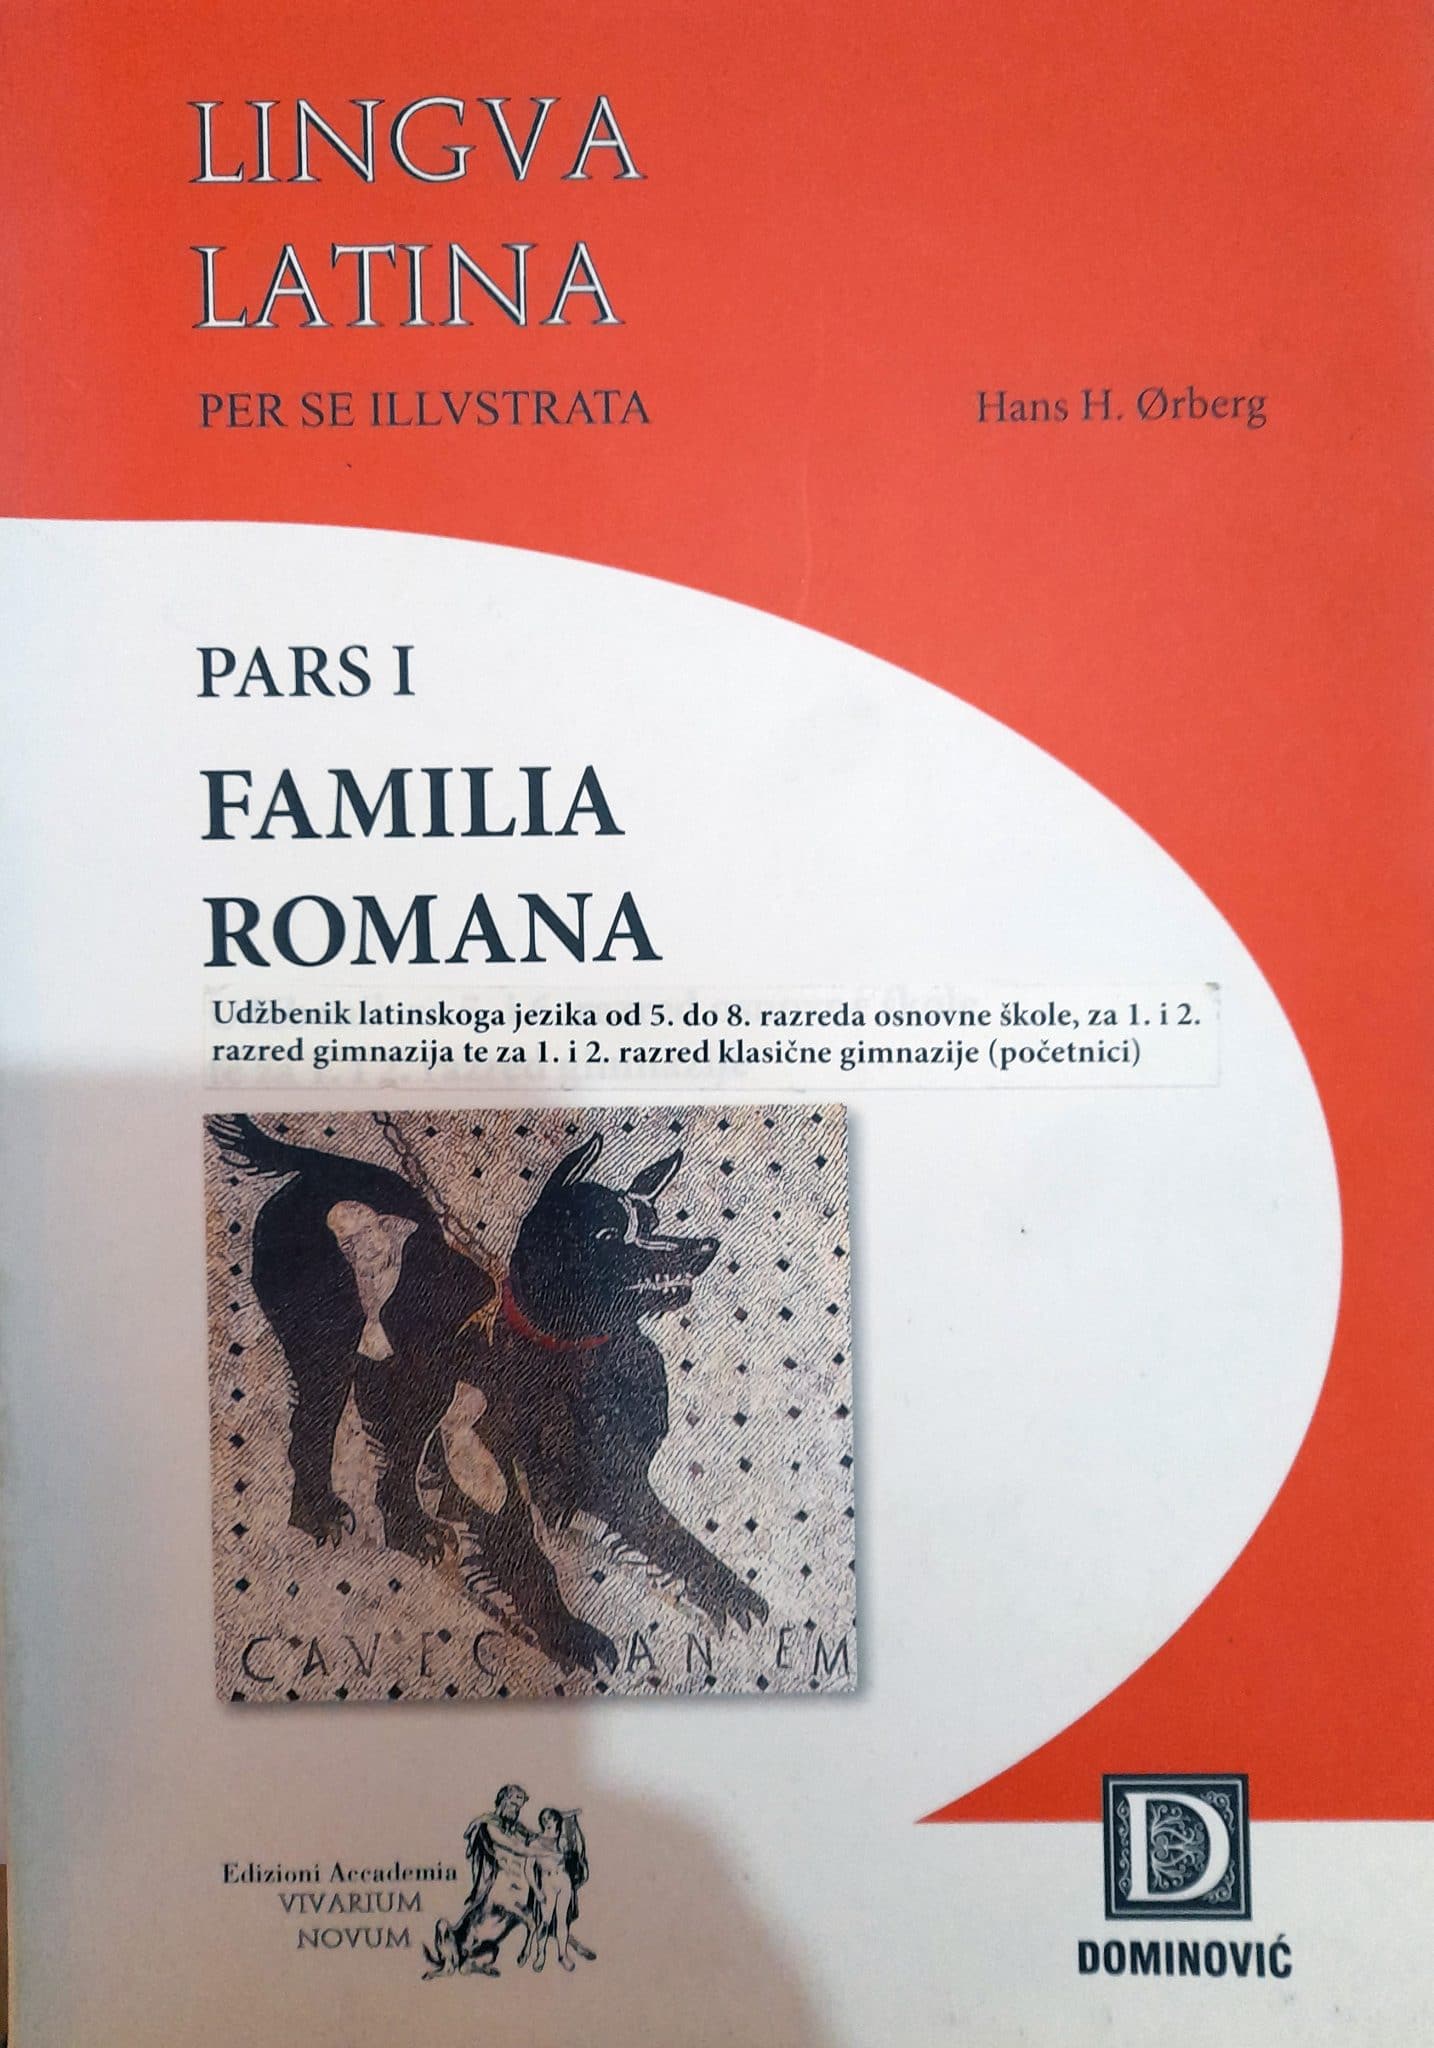 LINGUA LATINA PER SE ILLUSTRATA : Pars I, Familia Romana : udžbenik latinskog jezika